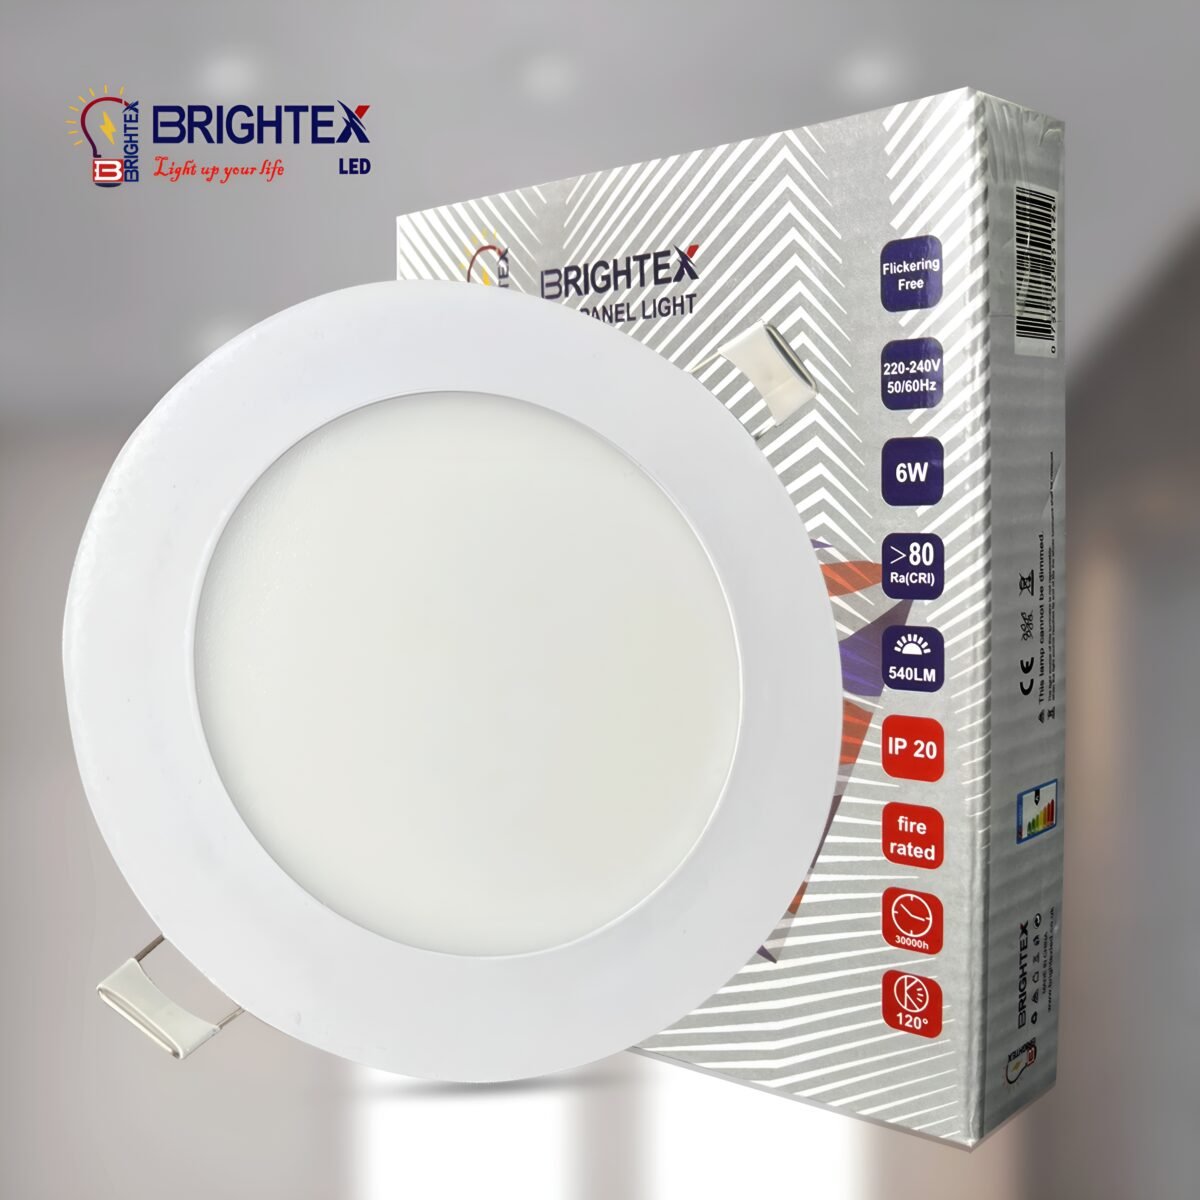 Brightex led panel light 6w